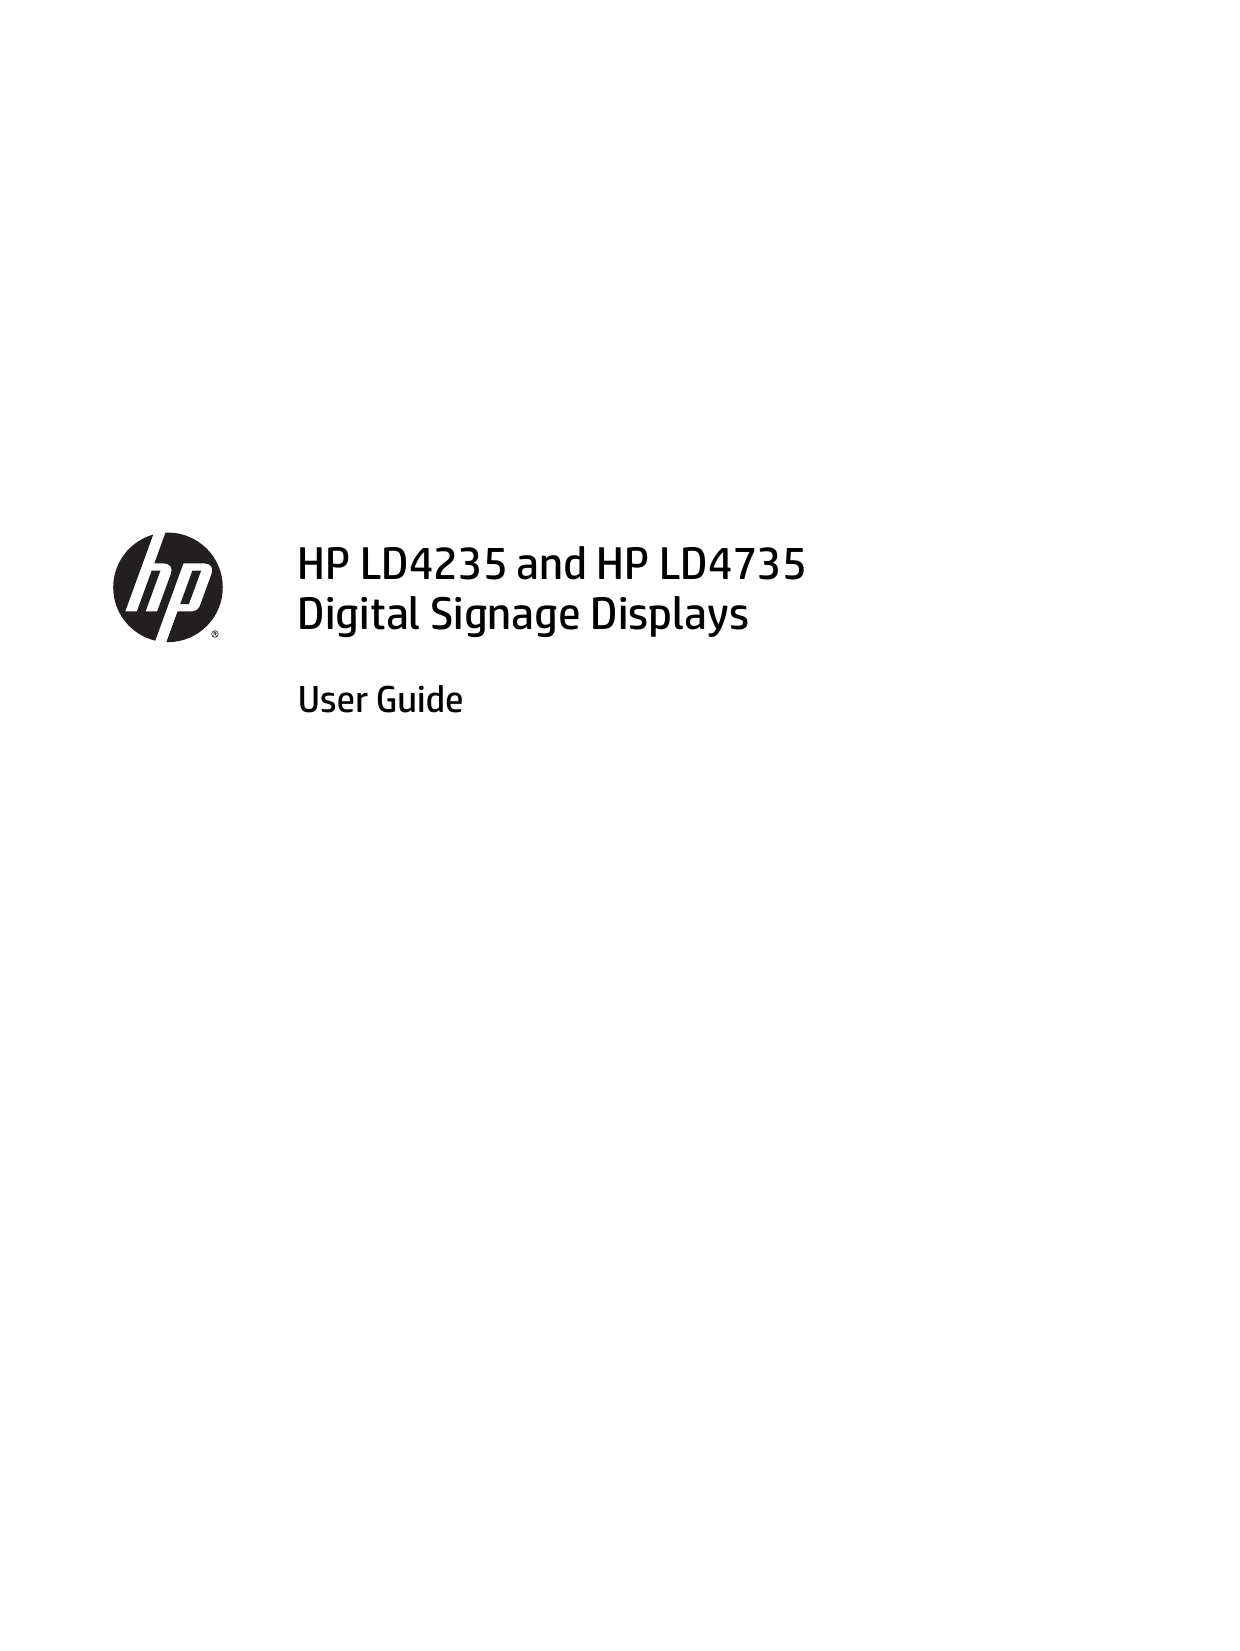 HP LD4235 and HP LD4735Digital Signage DisplaysUser Guide